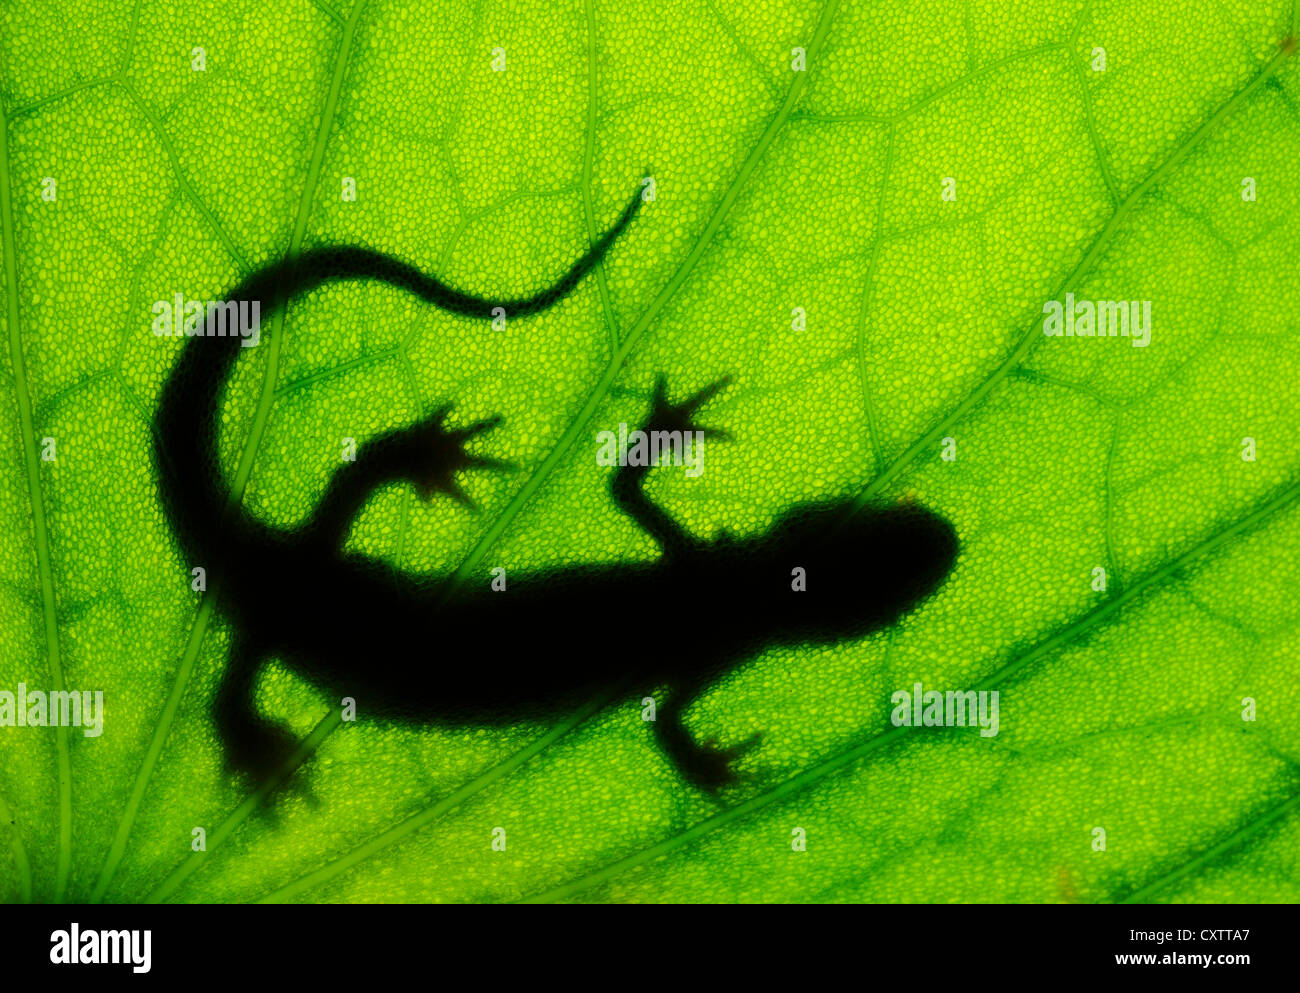 Sombra de newt en Lilly pad leaf Foto de stock